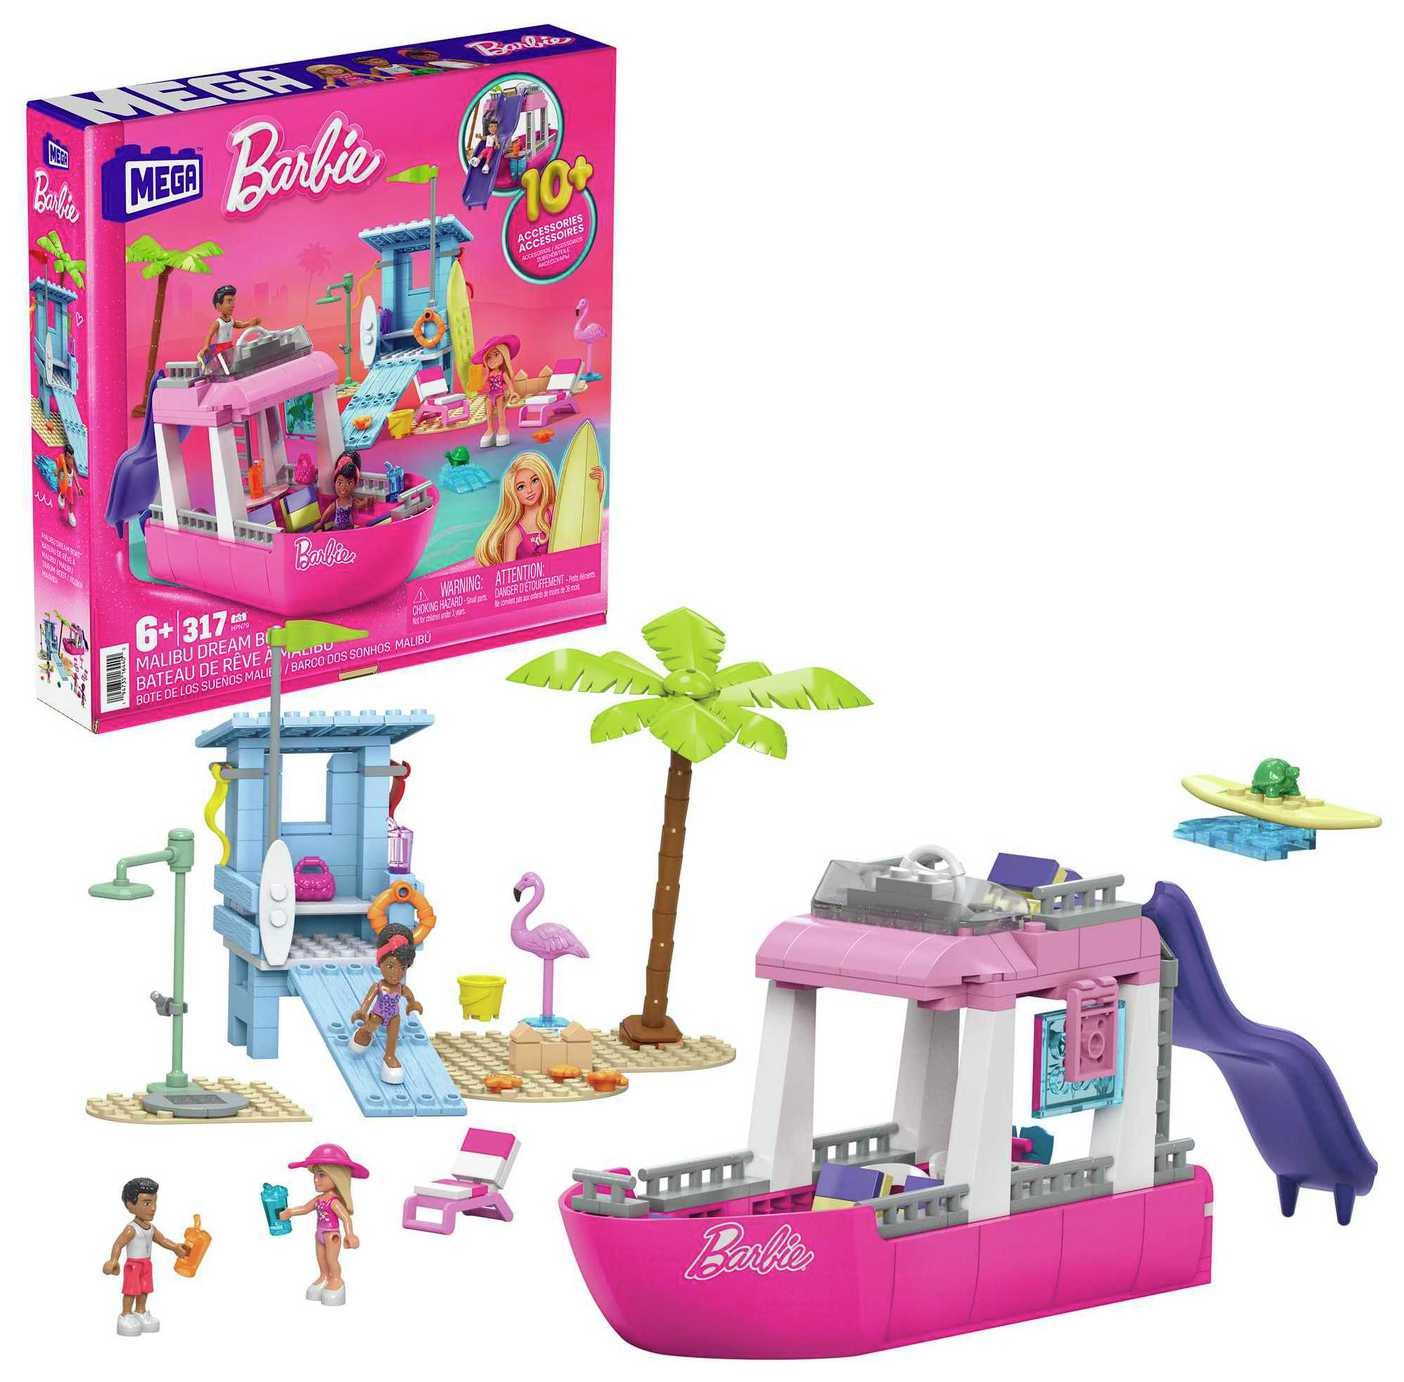 Mega Barbie Building Set - Malibu Dream Boat